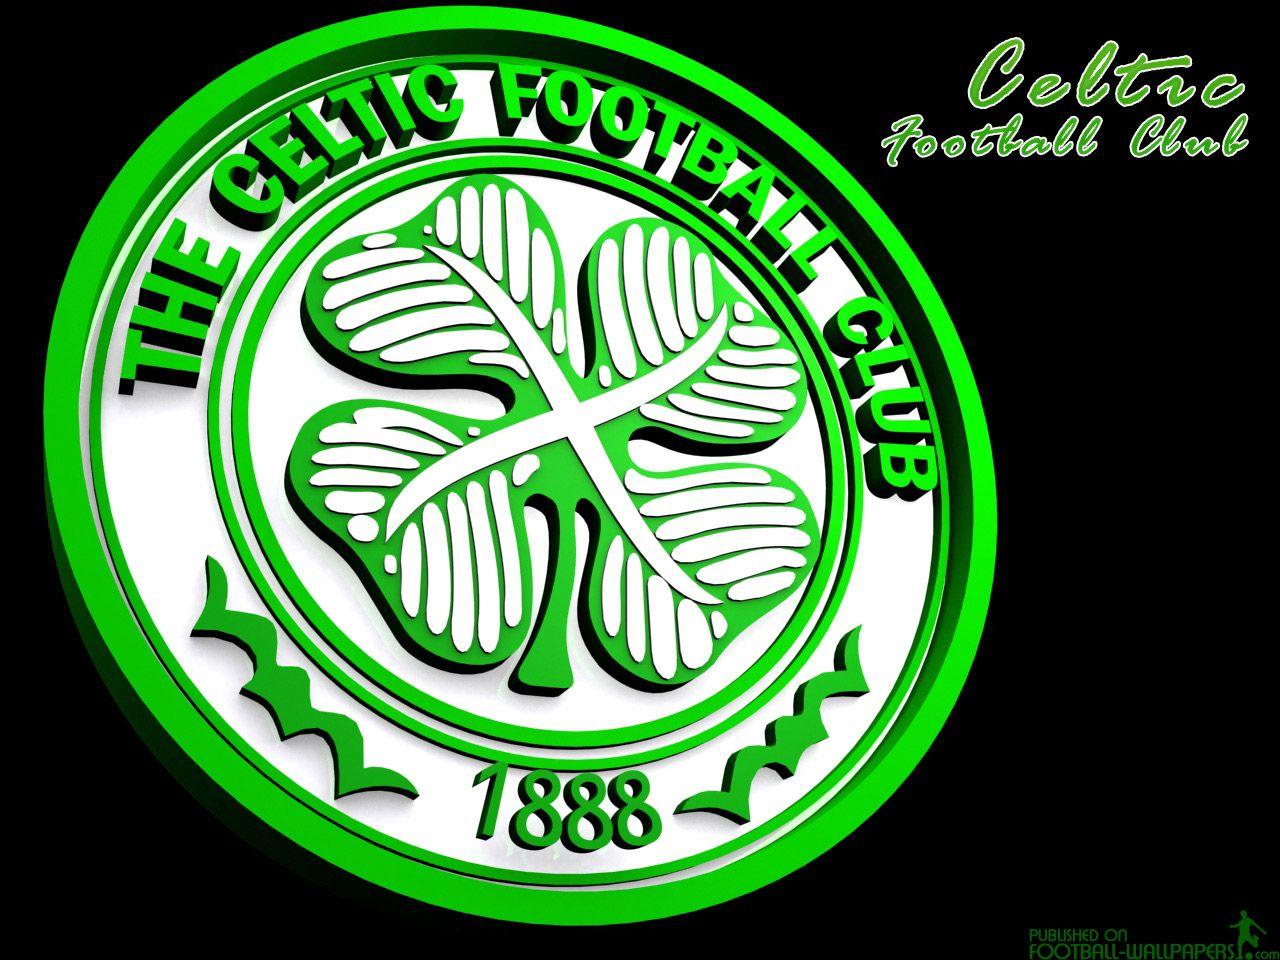 Celtic Fc Wallpaper